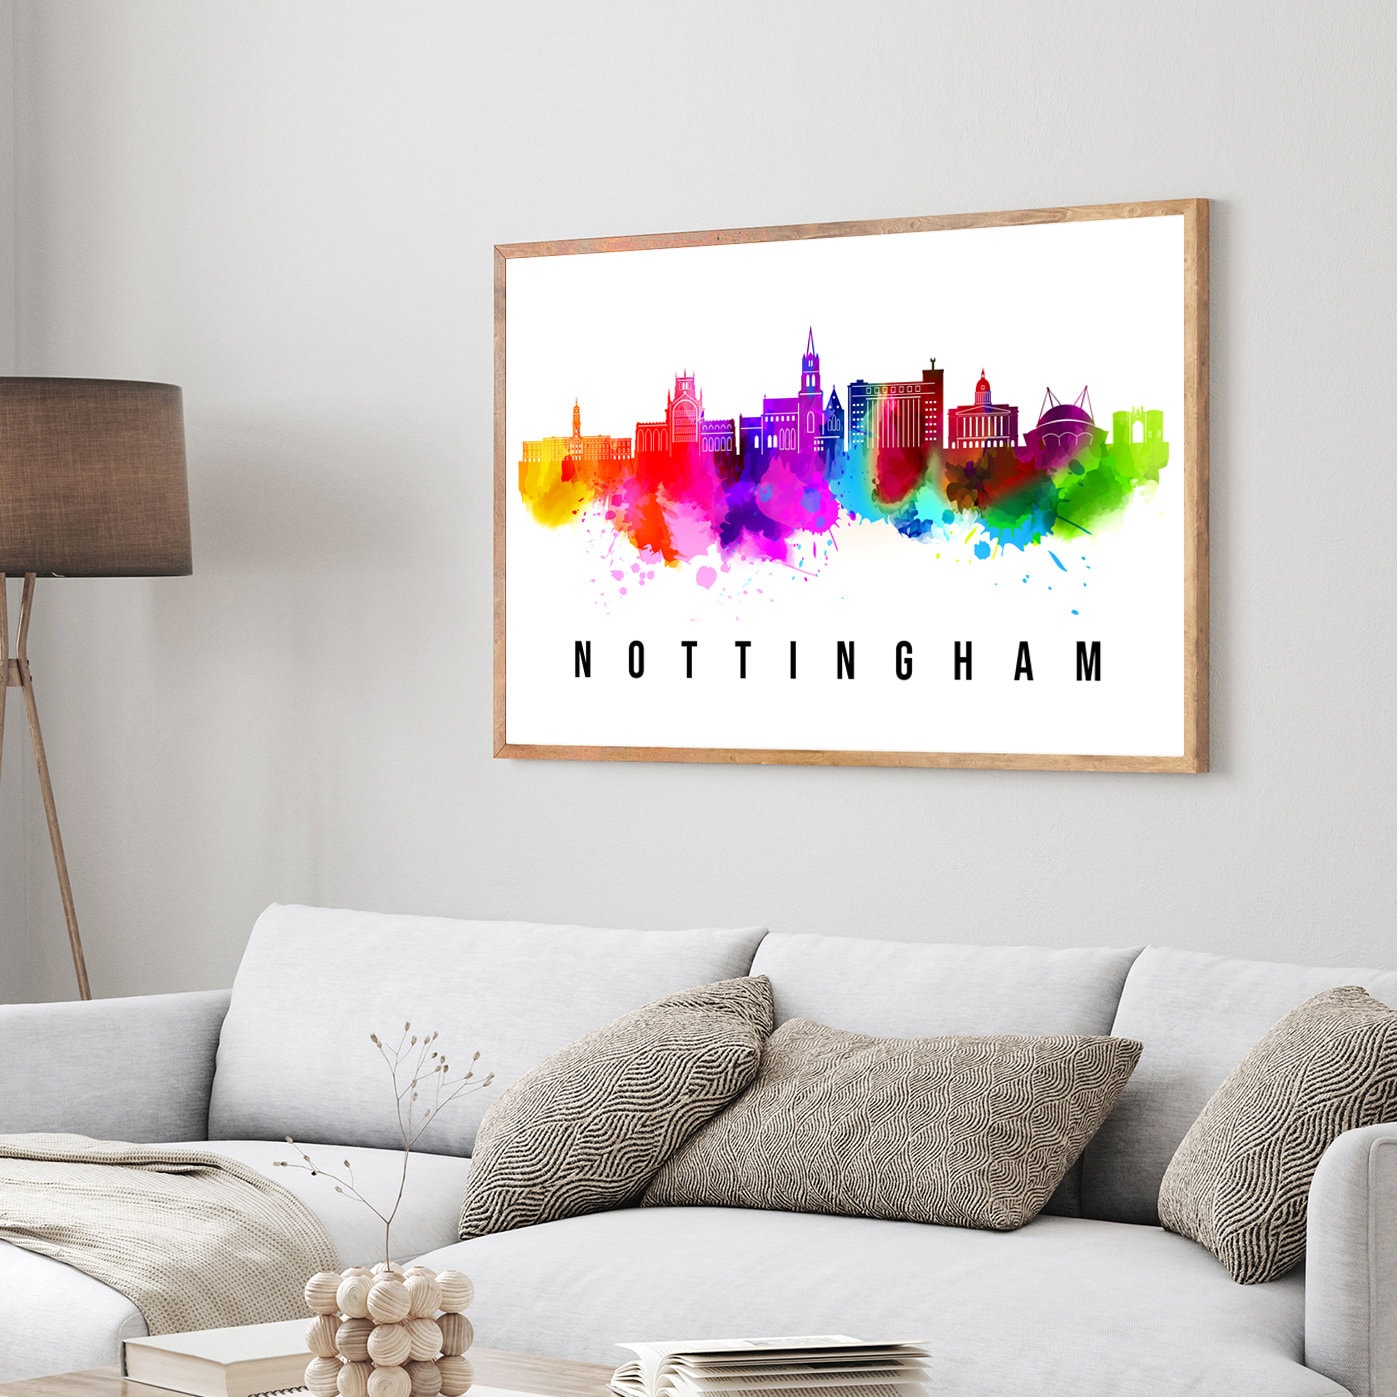 Nottingham England Poster, Skyline poster cityscape poster, Landmark City Illustration poster, Home wall decoration, Office wall art